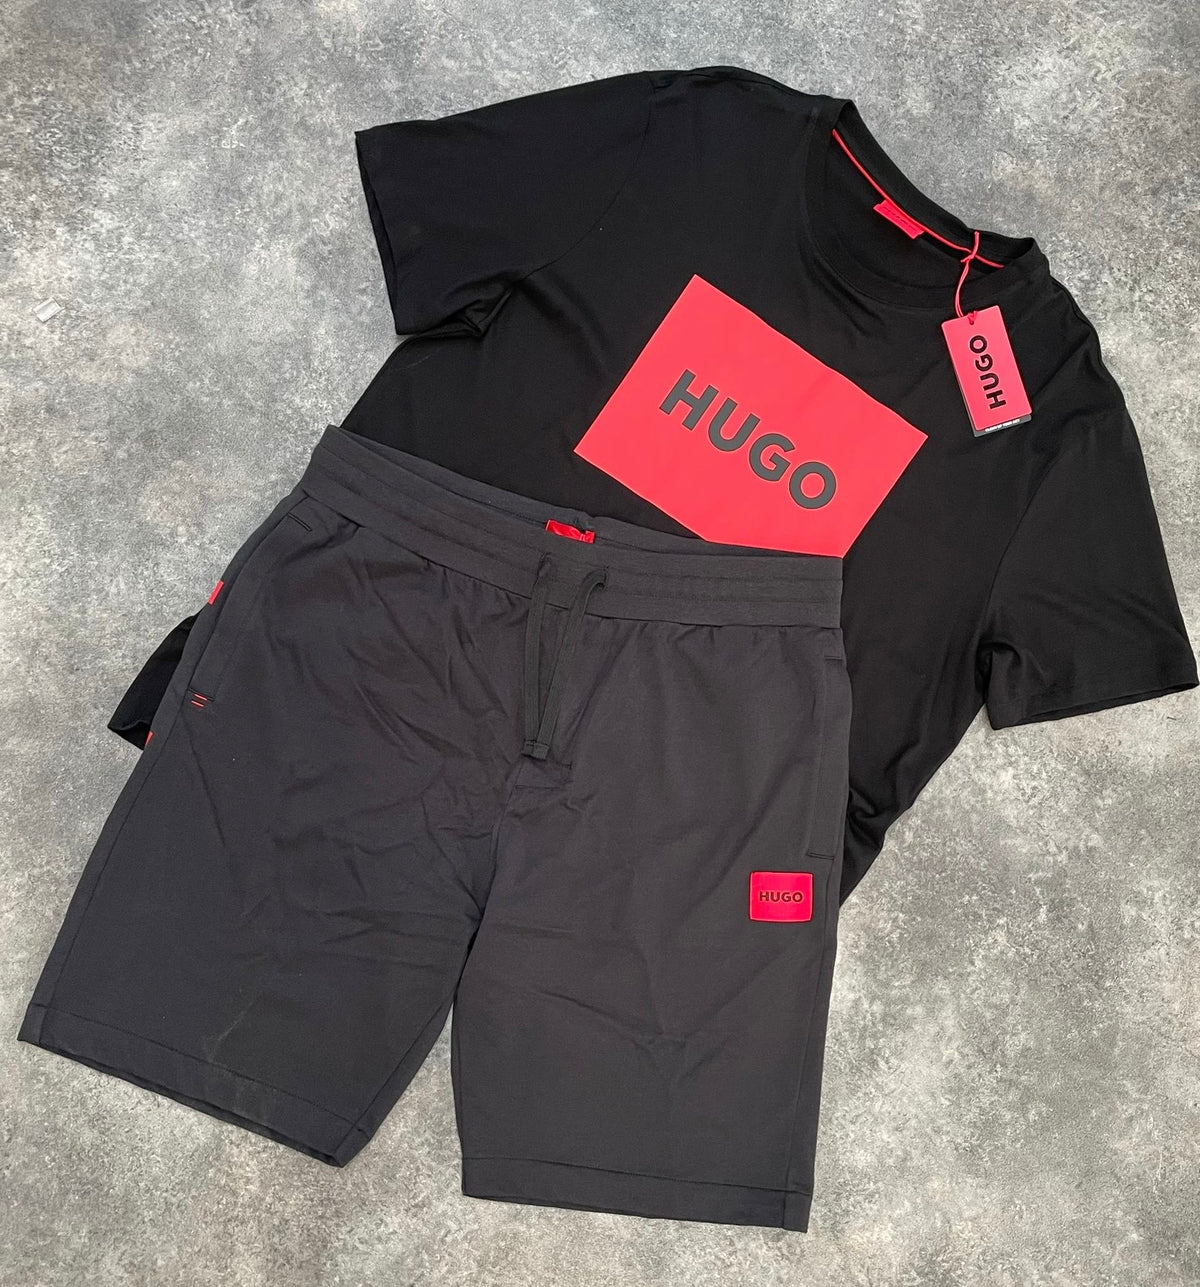 HUGO BOSS HUGO T-SHIRT & SWIM SHORTS SET BLACK & BLACK  * SALE *